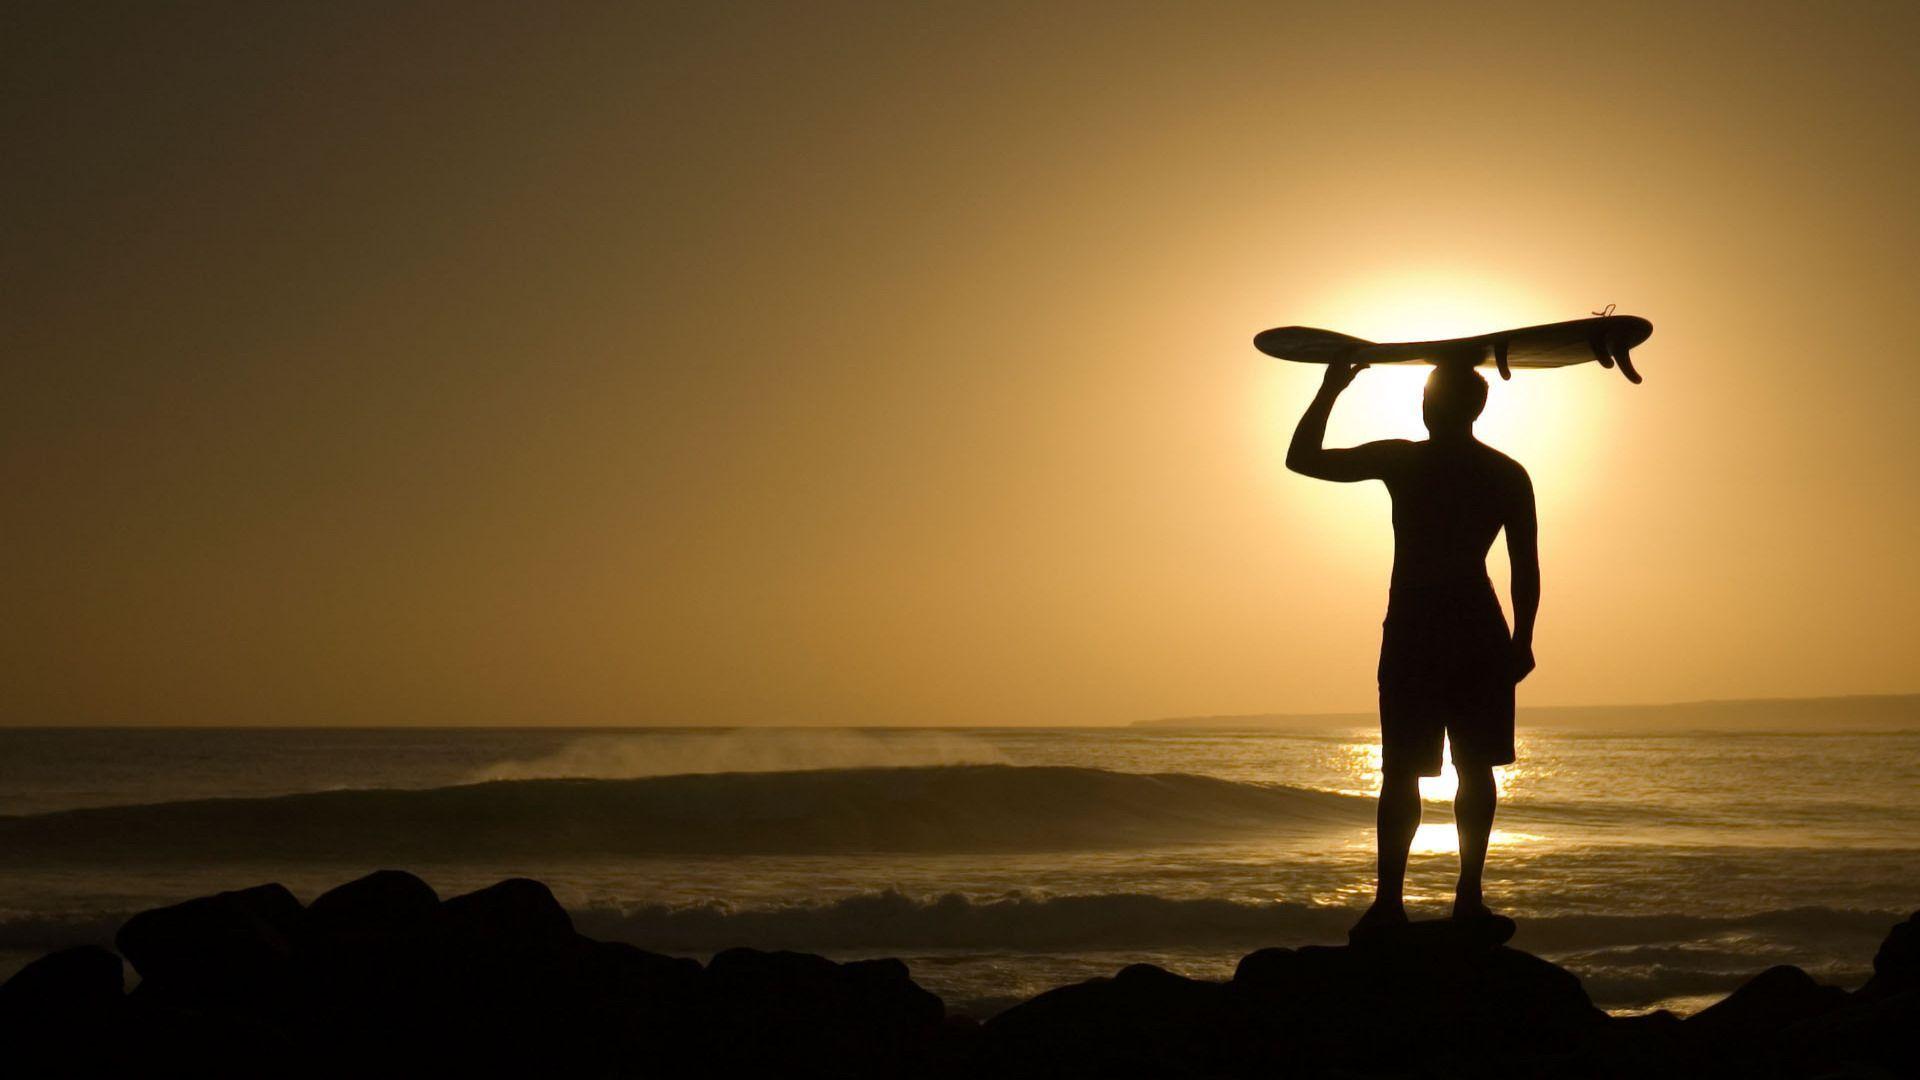 Surfer at Sunset Wallpaper